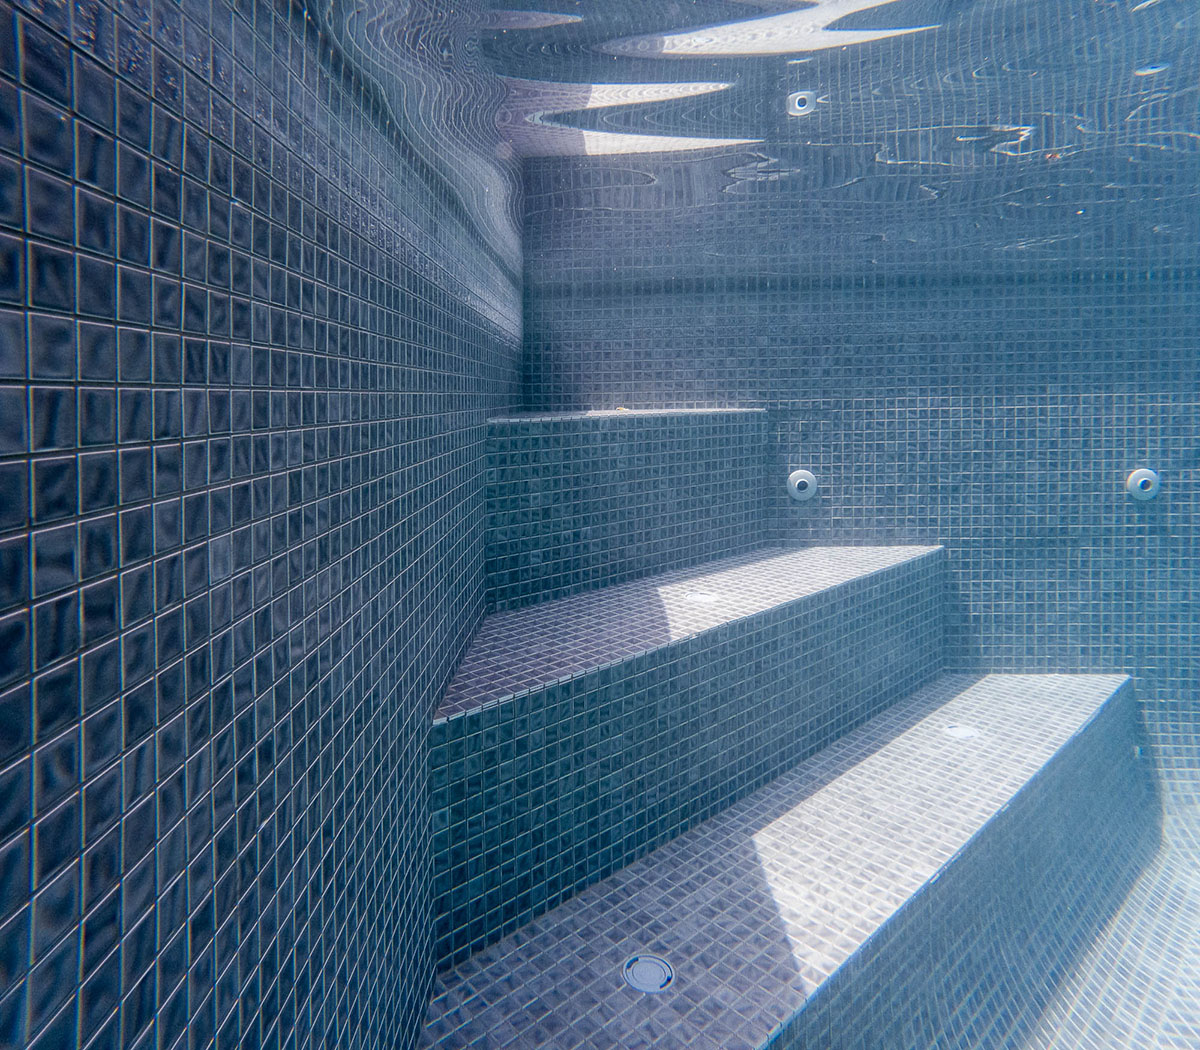 Graphite CMC590 Fully-Tiled Pool Steps